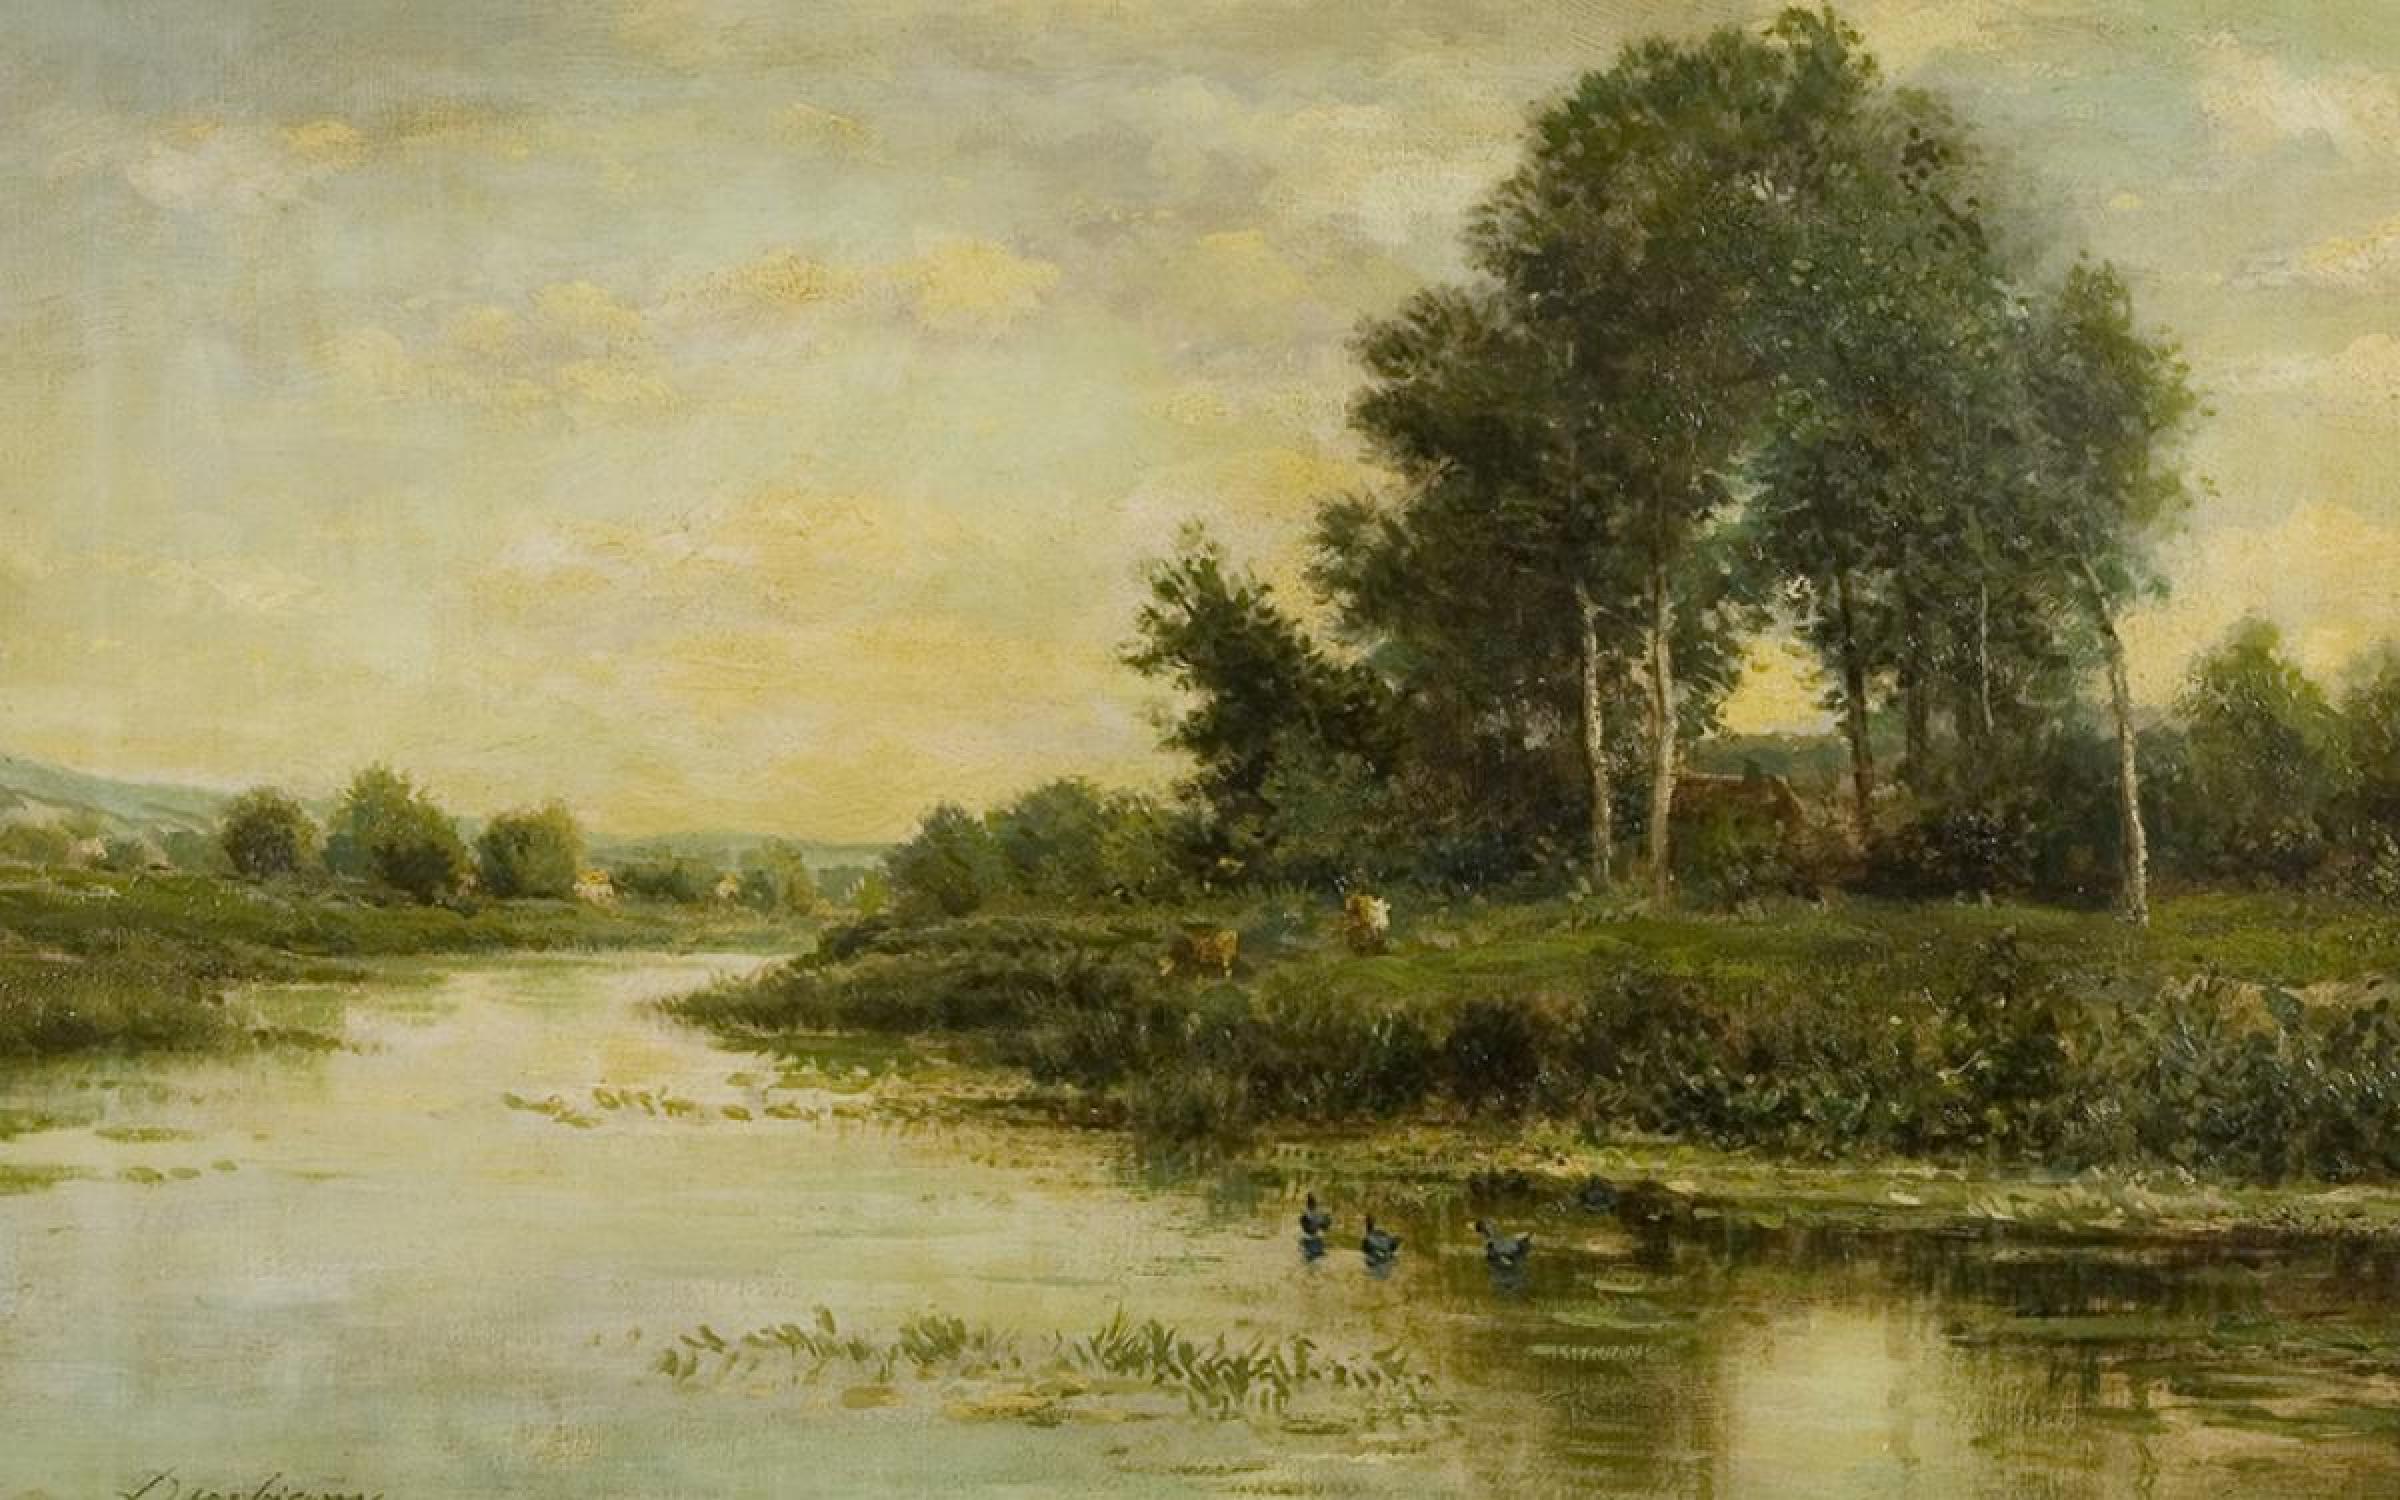 Charles-François Daubigny, (French, 1817-1878), The River, undated, oil on canvas, 16 x 24 in., gift of Edward Bartlett Wicks, UMFA1926.010